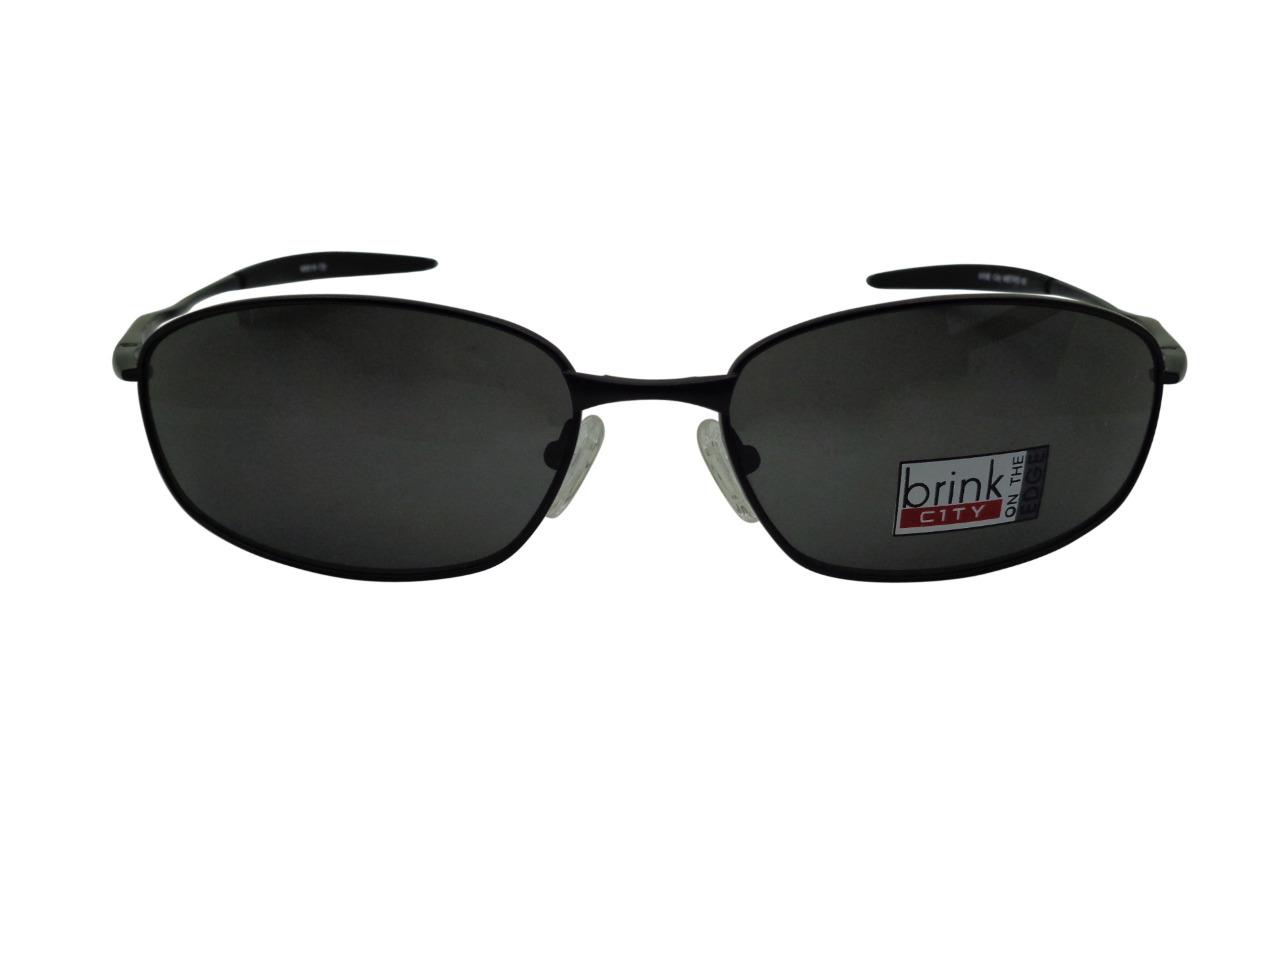 New BRINK 6018 Sunglasses 60 c2 Matt BLACK frame lens mens UV protection wrap 